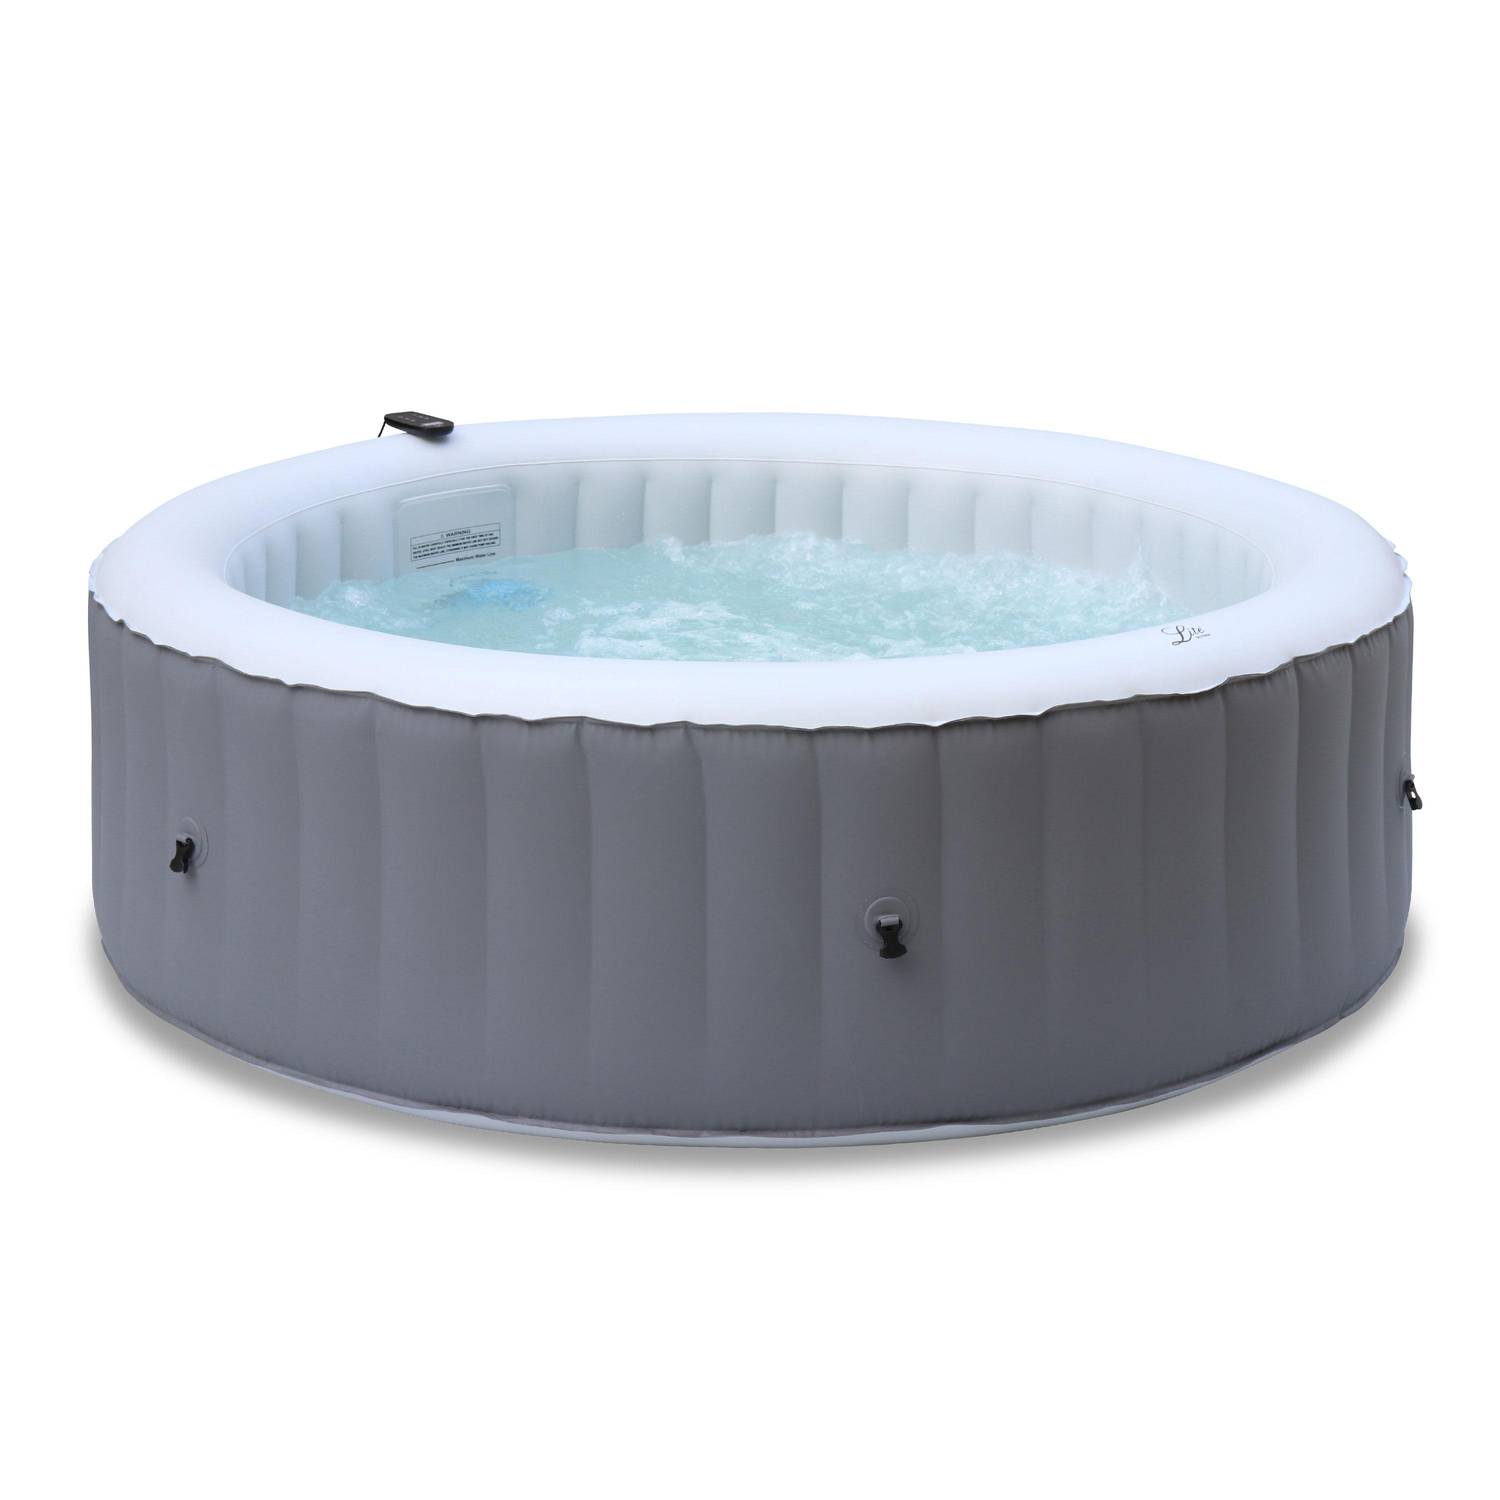  6-person round inflatable hot tub MSpa - Ø205cm round 6-person spa, PVC, pump, heater, filter, remote control - Kili 6 - Grey Photo1